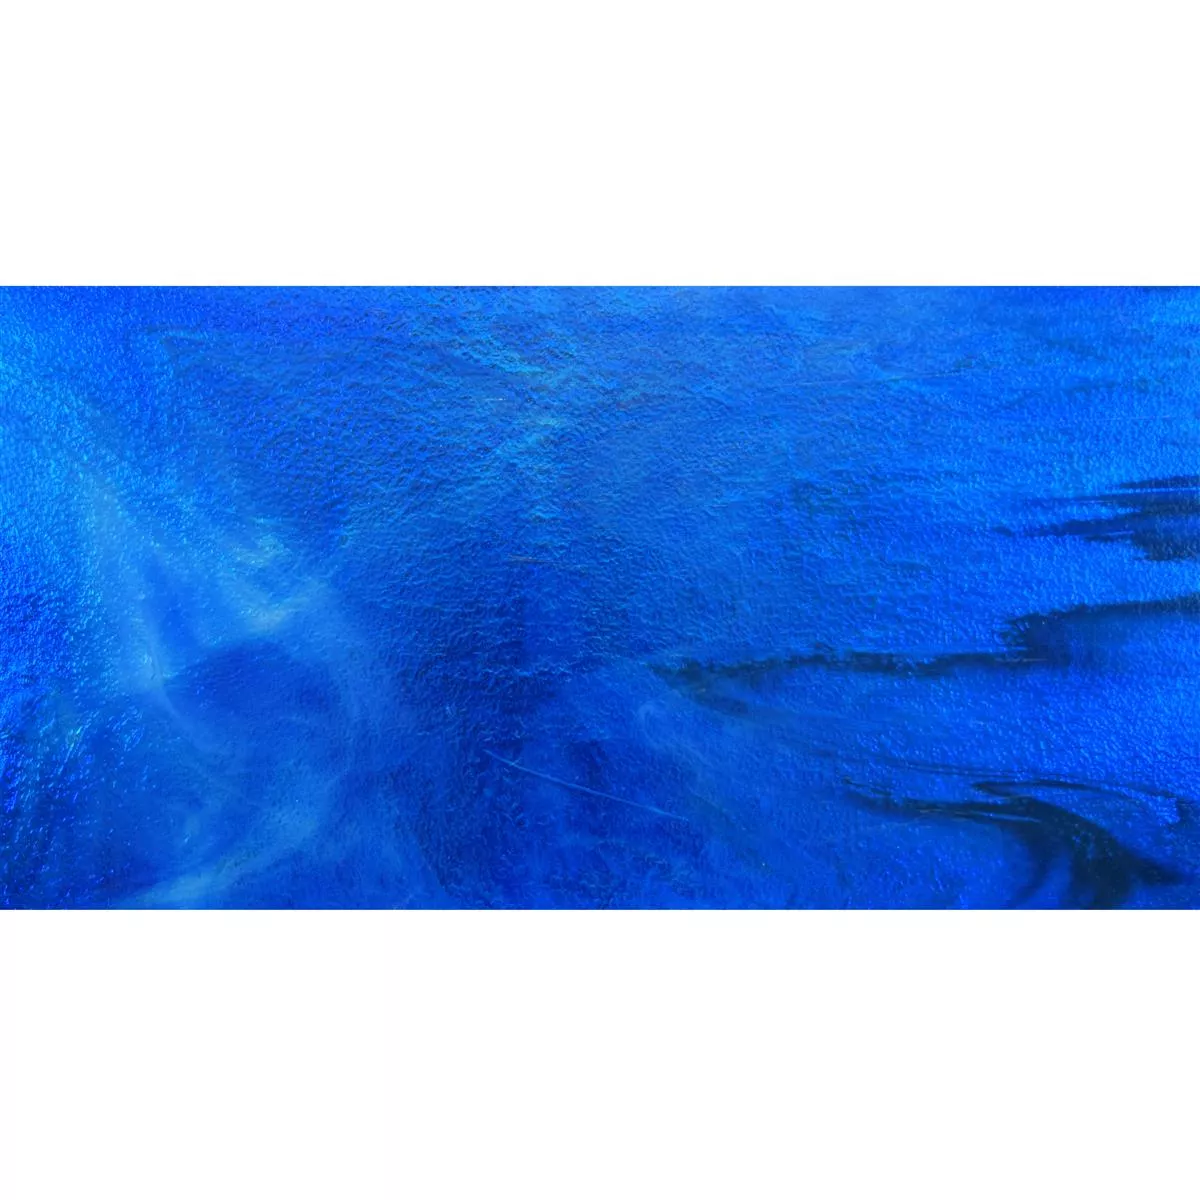 Staklo Zidne Pločice Trend-Vi Supreme Maritime Blue 30x60cm